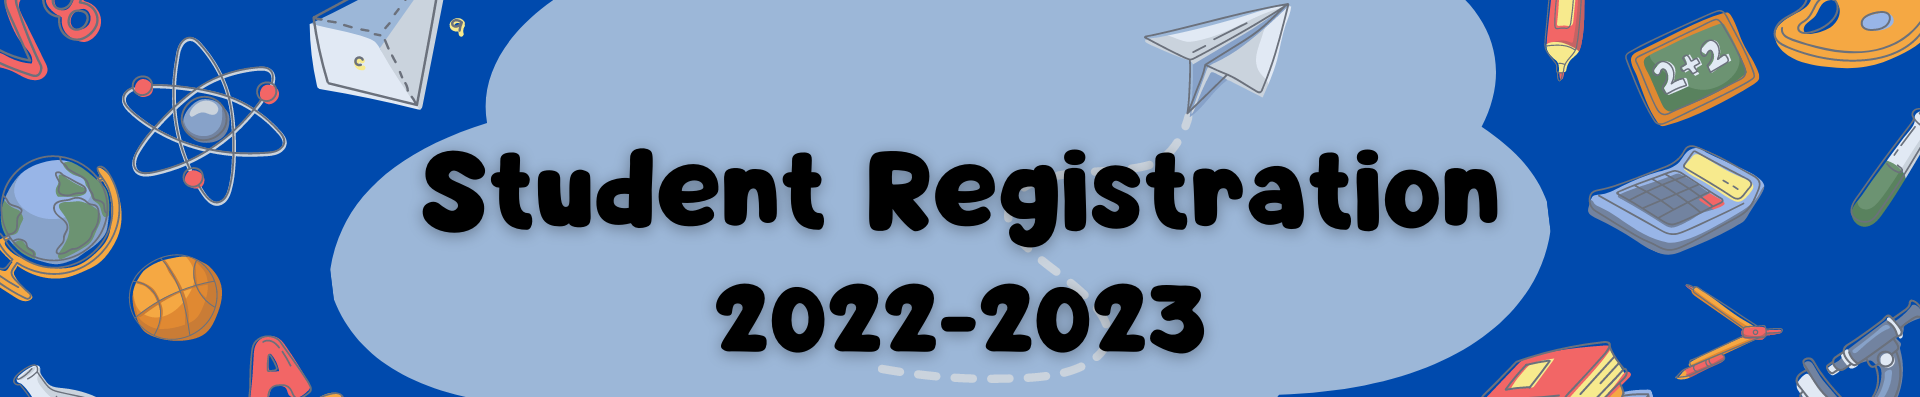 student registration 2022-2023